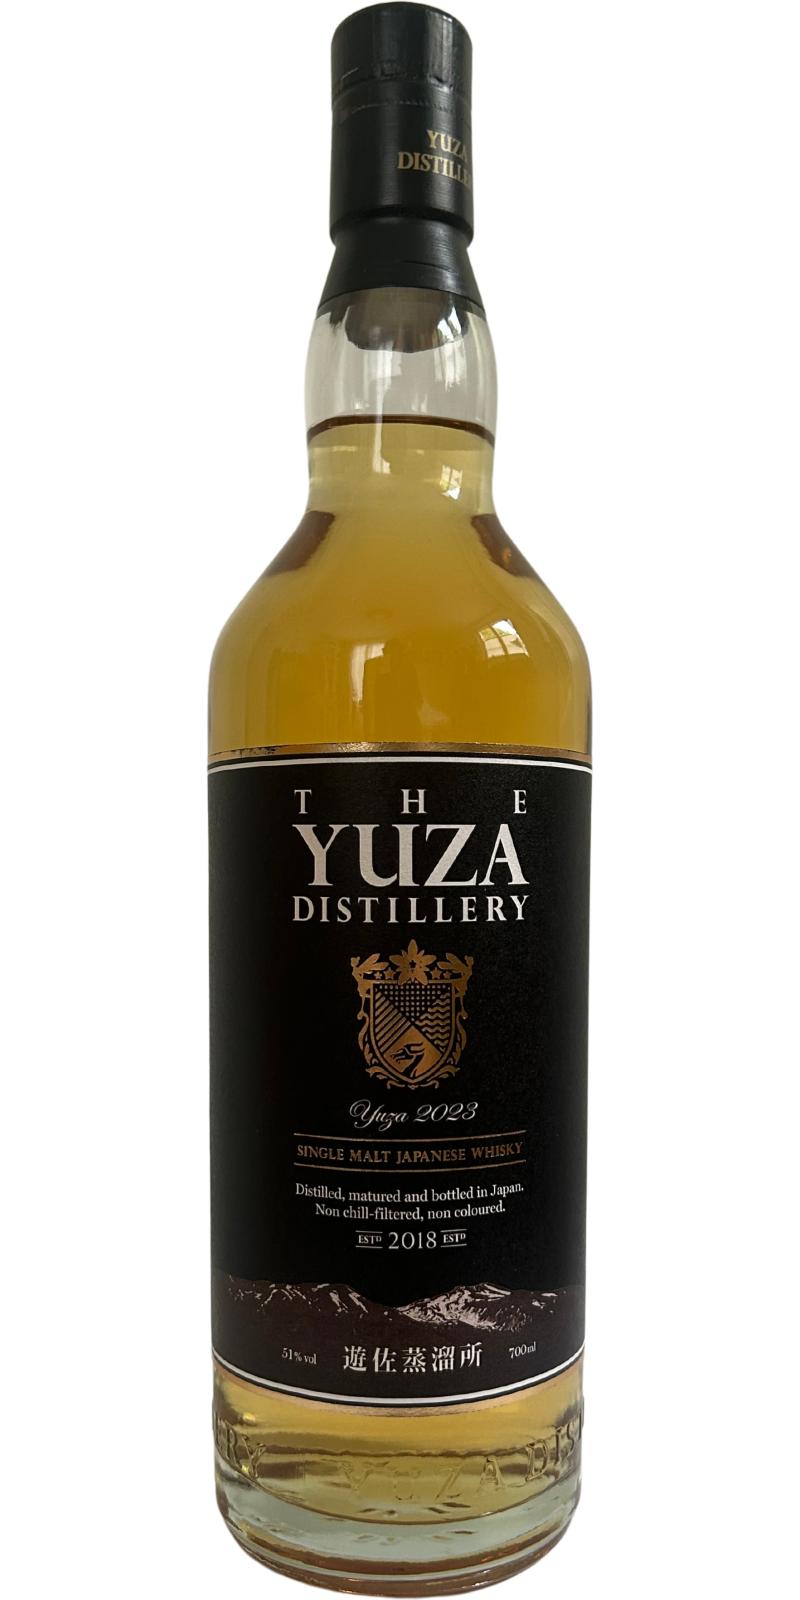 Yuza Single Malt Japanese Whisky - Ratings and reviews - Whiskybase